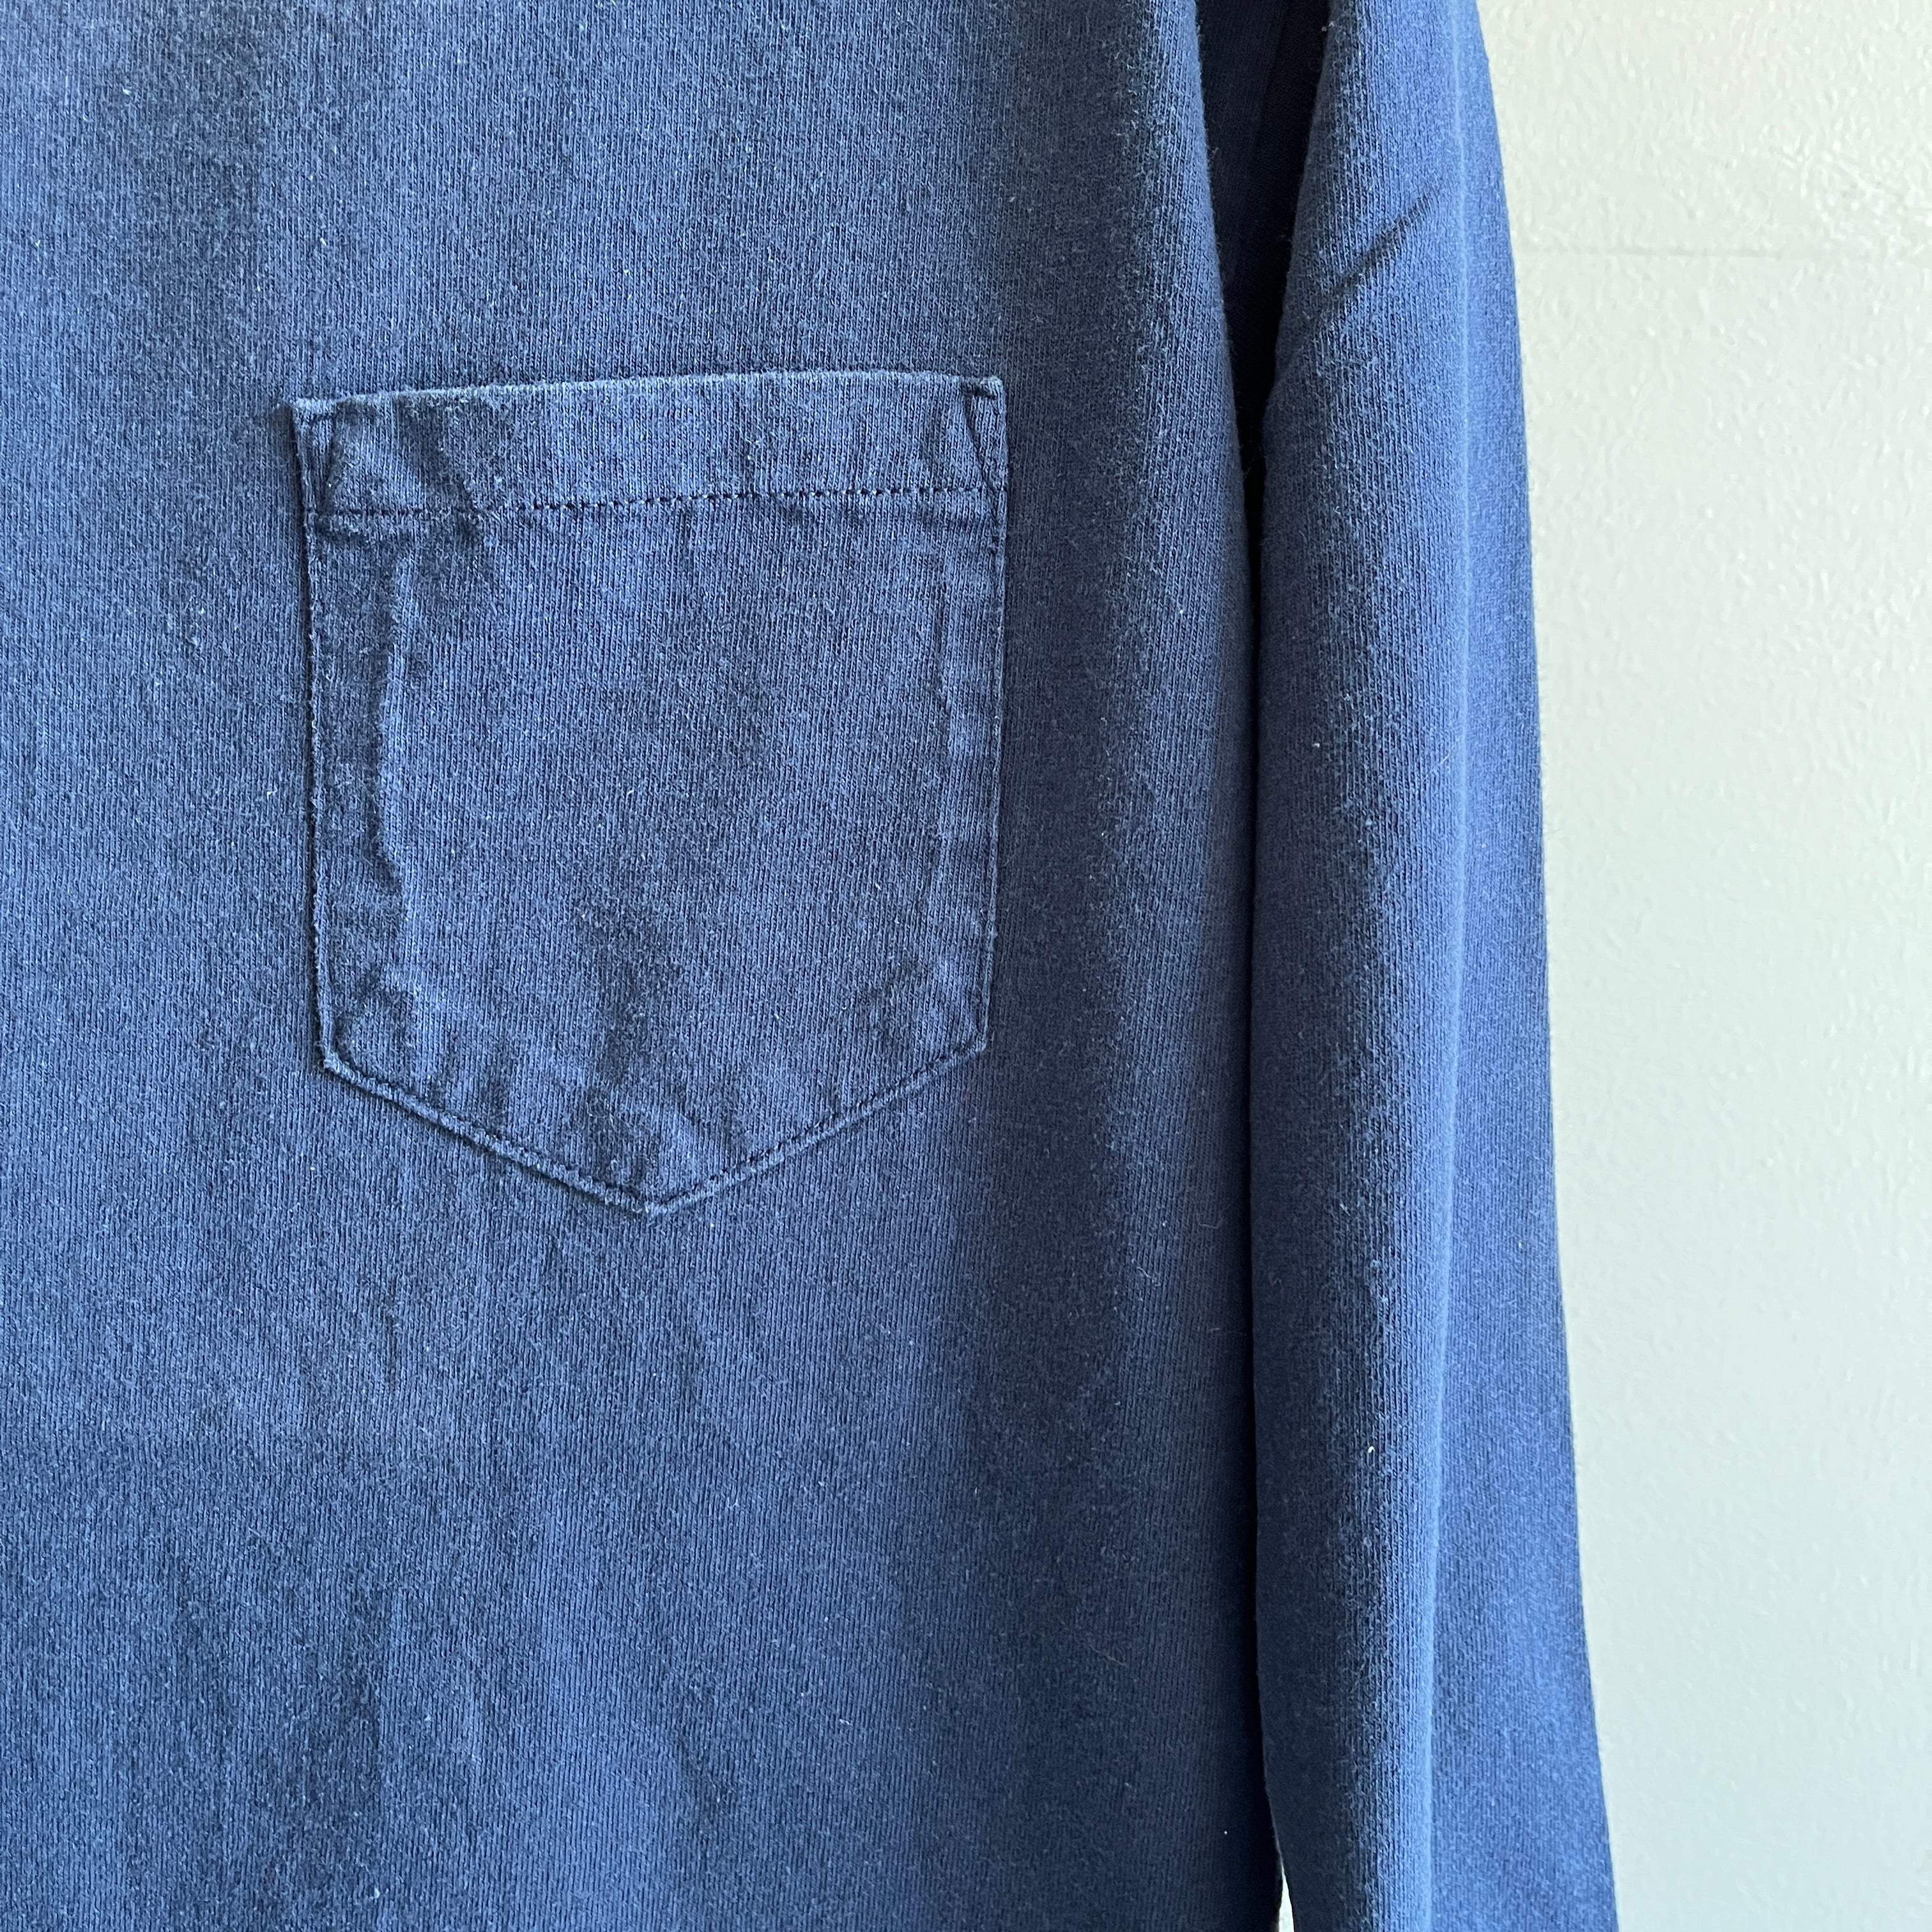 1980/90s USA MADE DICKIES Blank Cotton Navy Pocket Long Sleeve T-Shirt